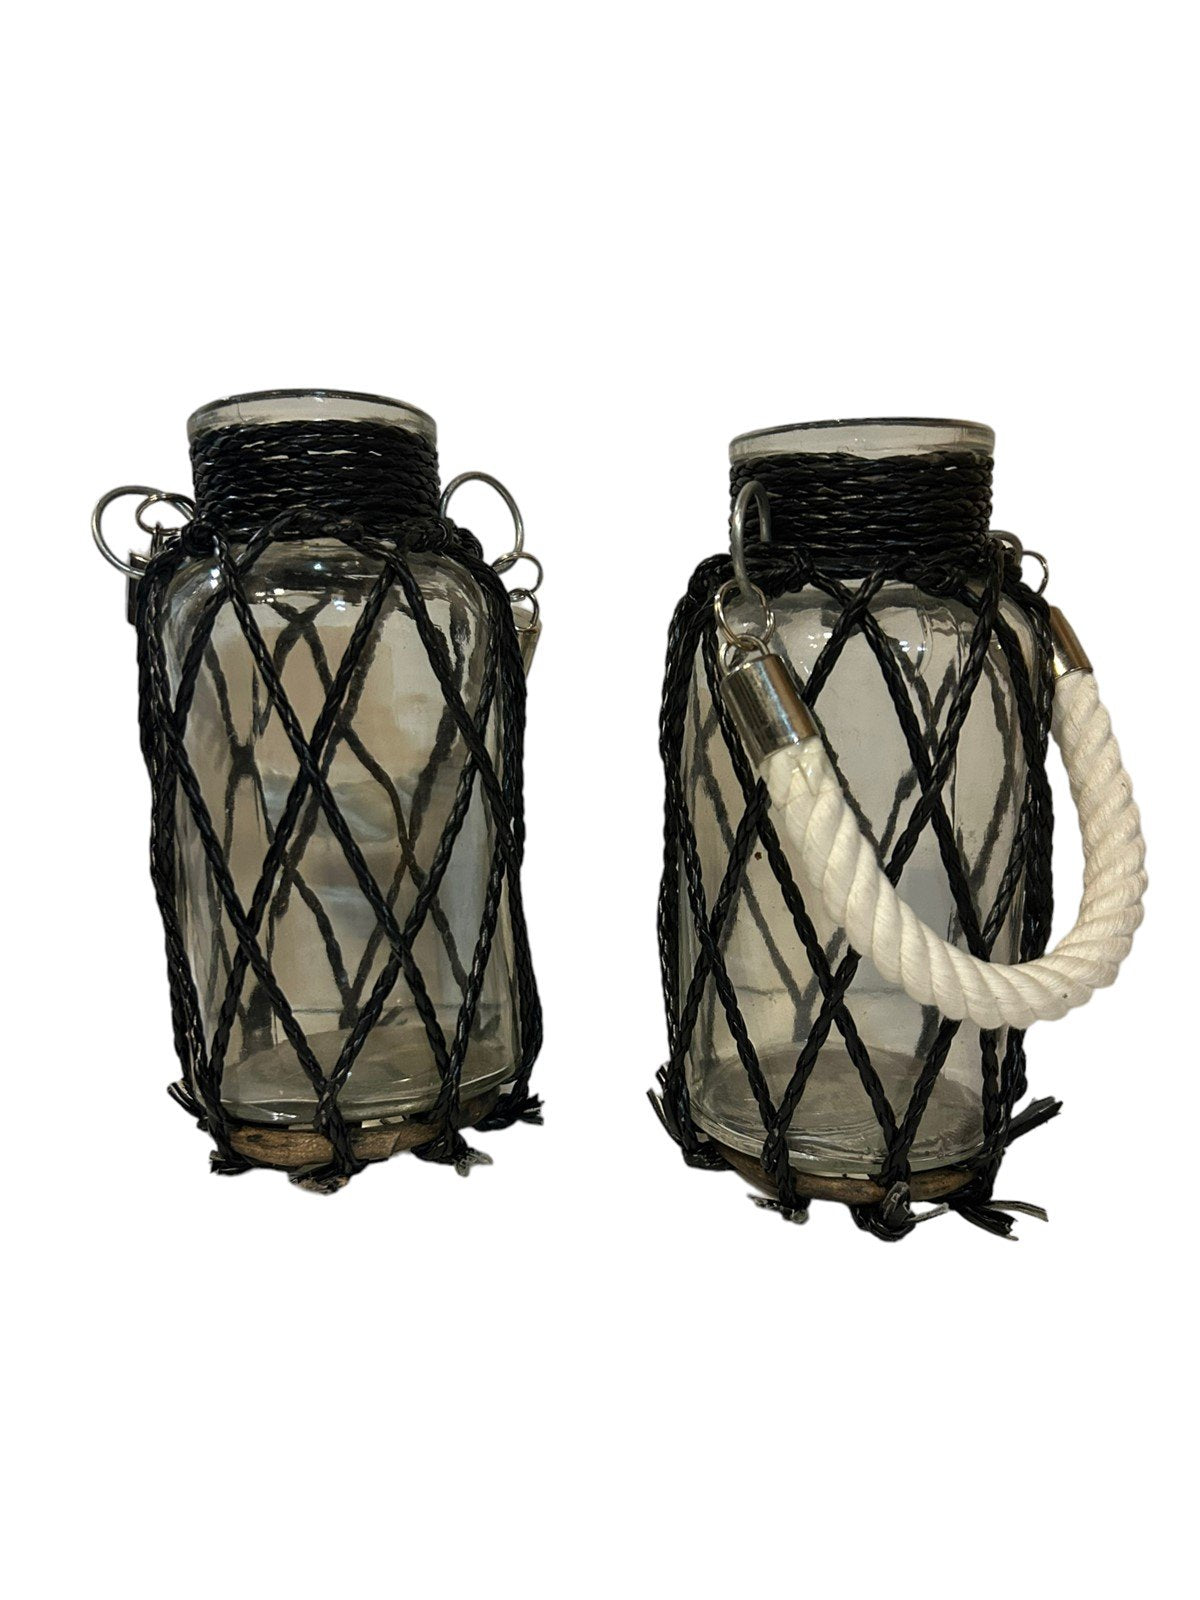 MCM Glass Mason Jar Vase Vintage Wrapped Set of 2 Floral Glass Vase Containers